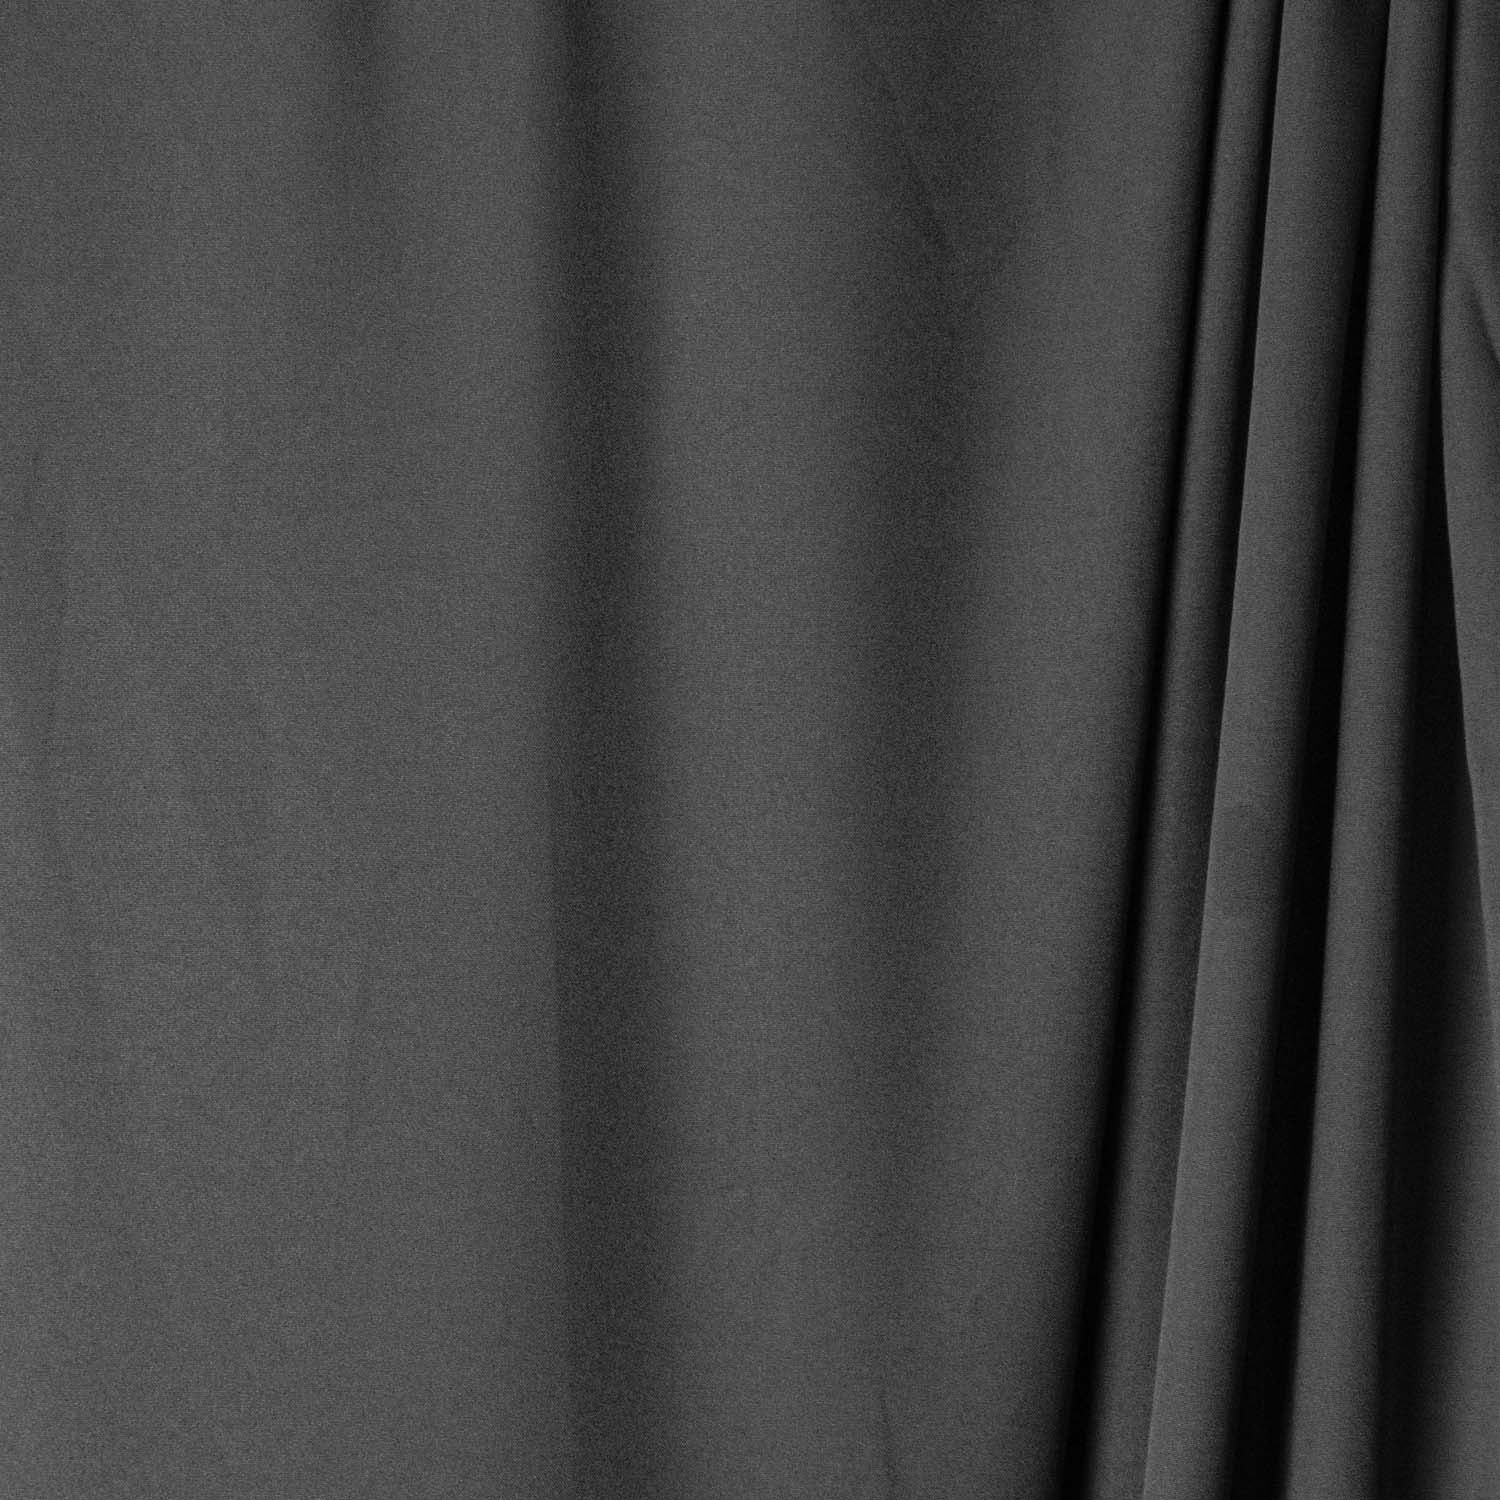 black wrinkle resistant fabric backdrops